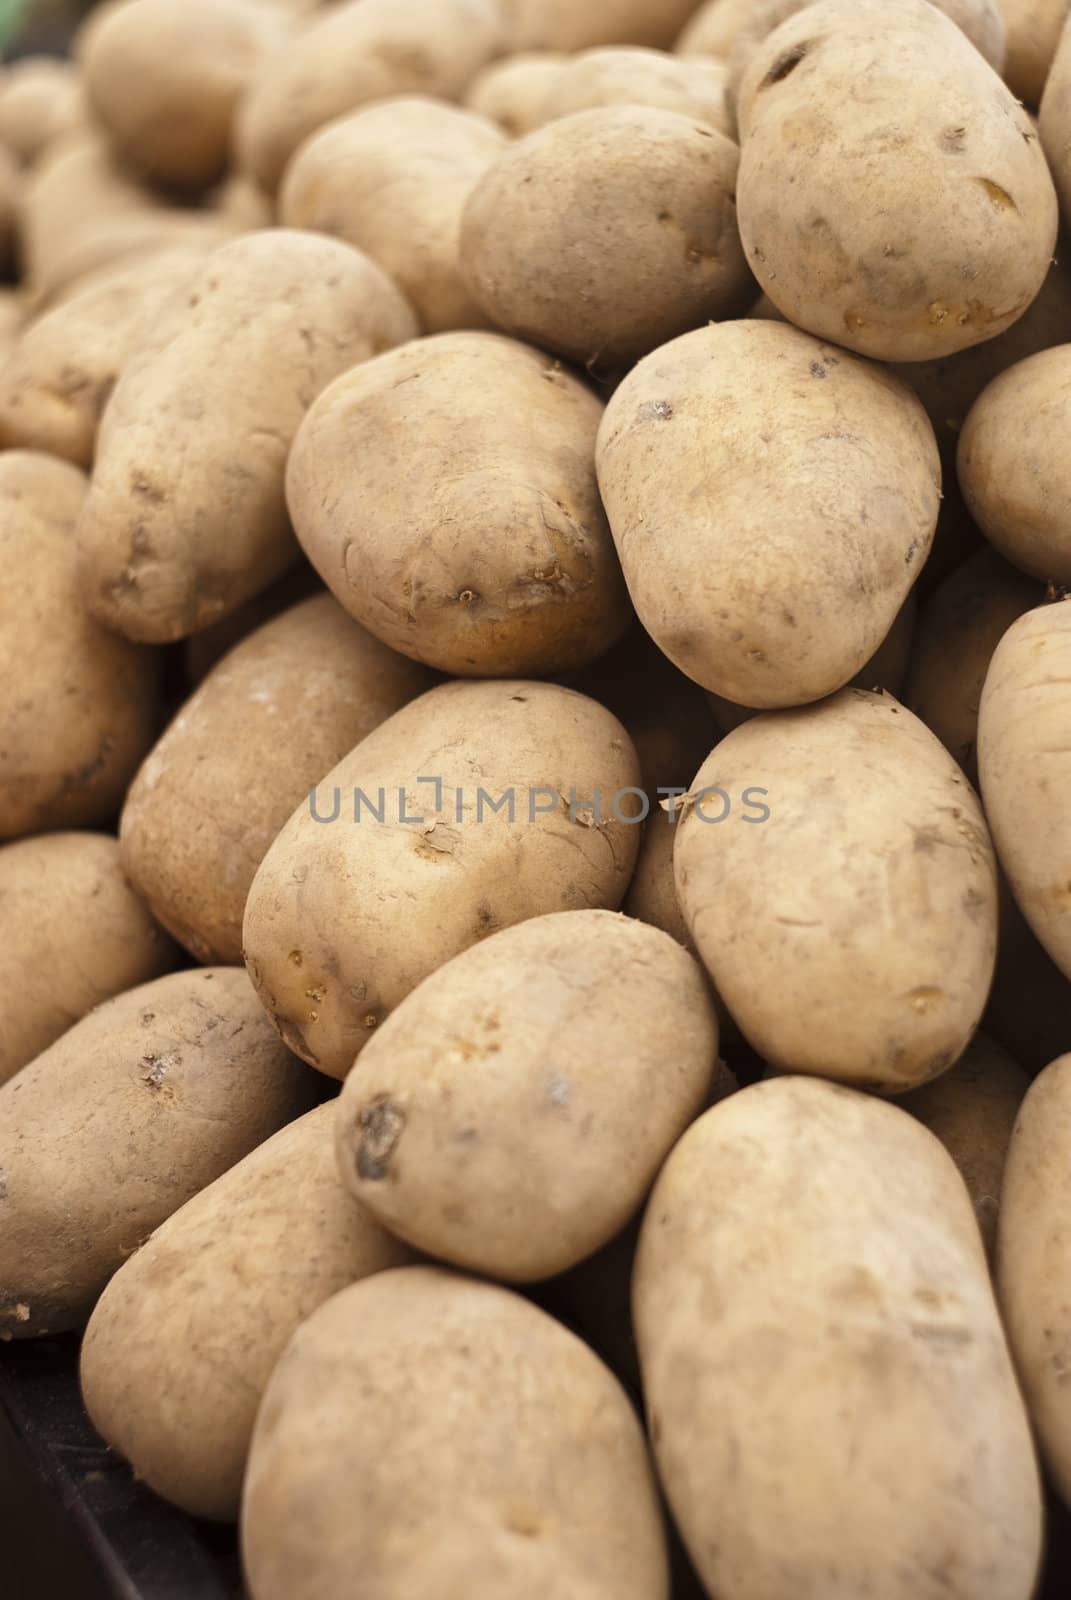 Pile of old potatoes by gandolfocannatella